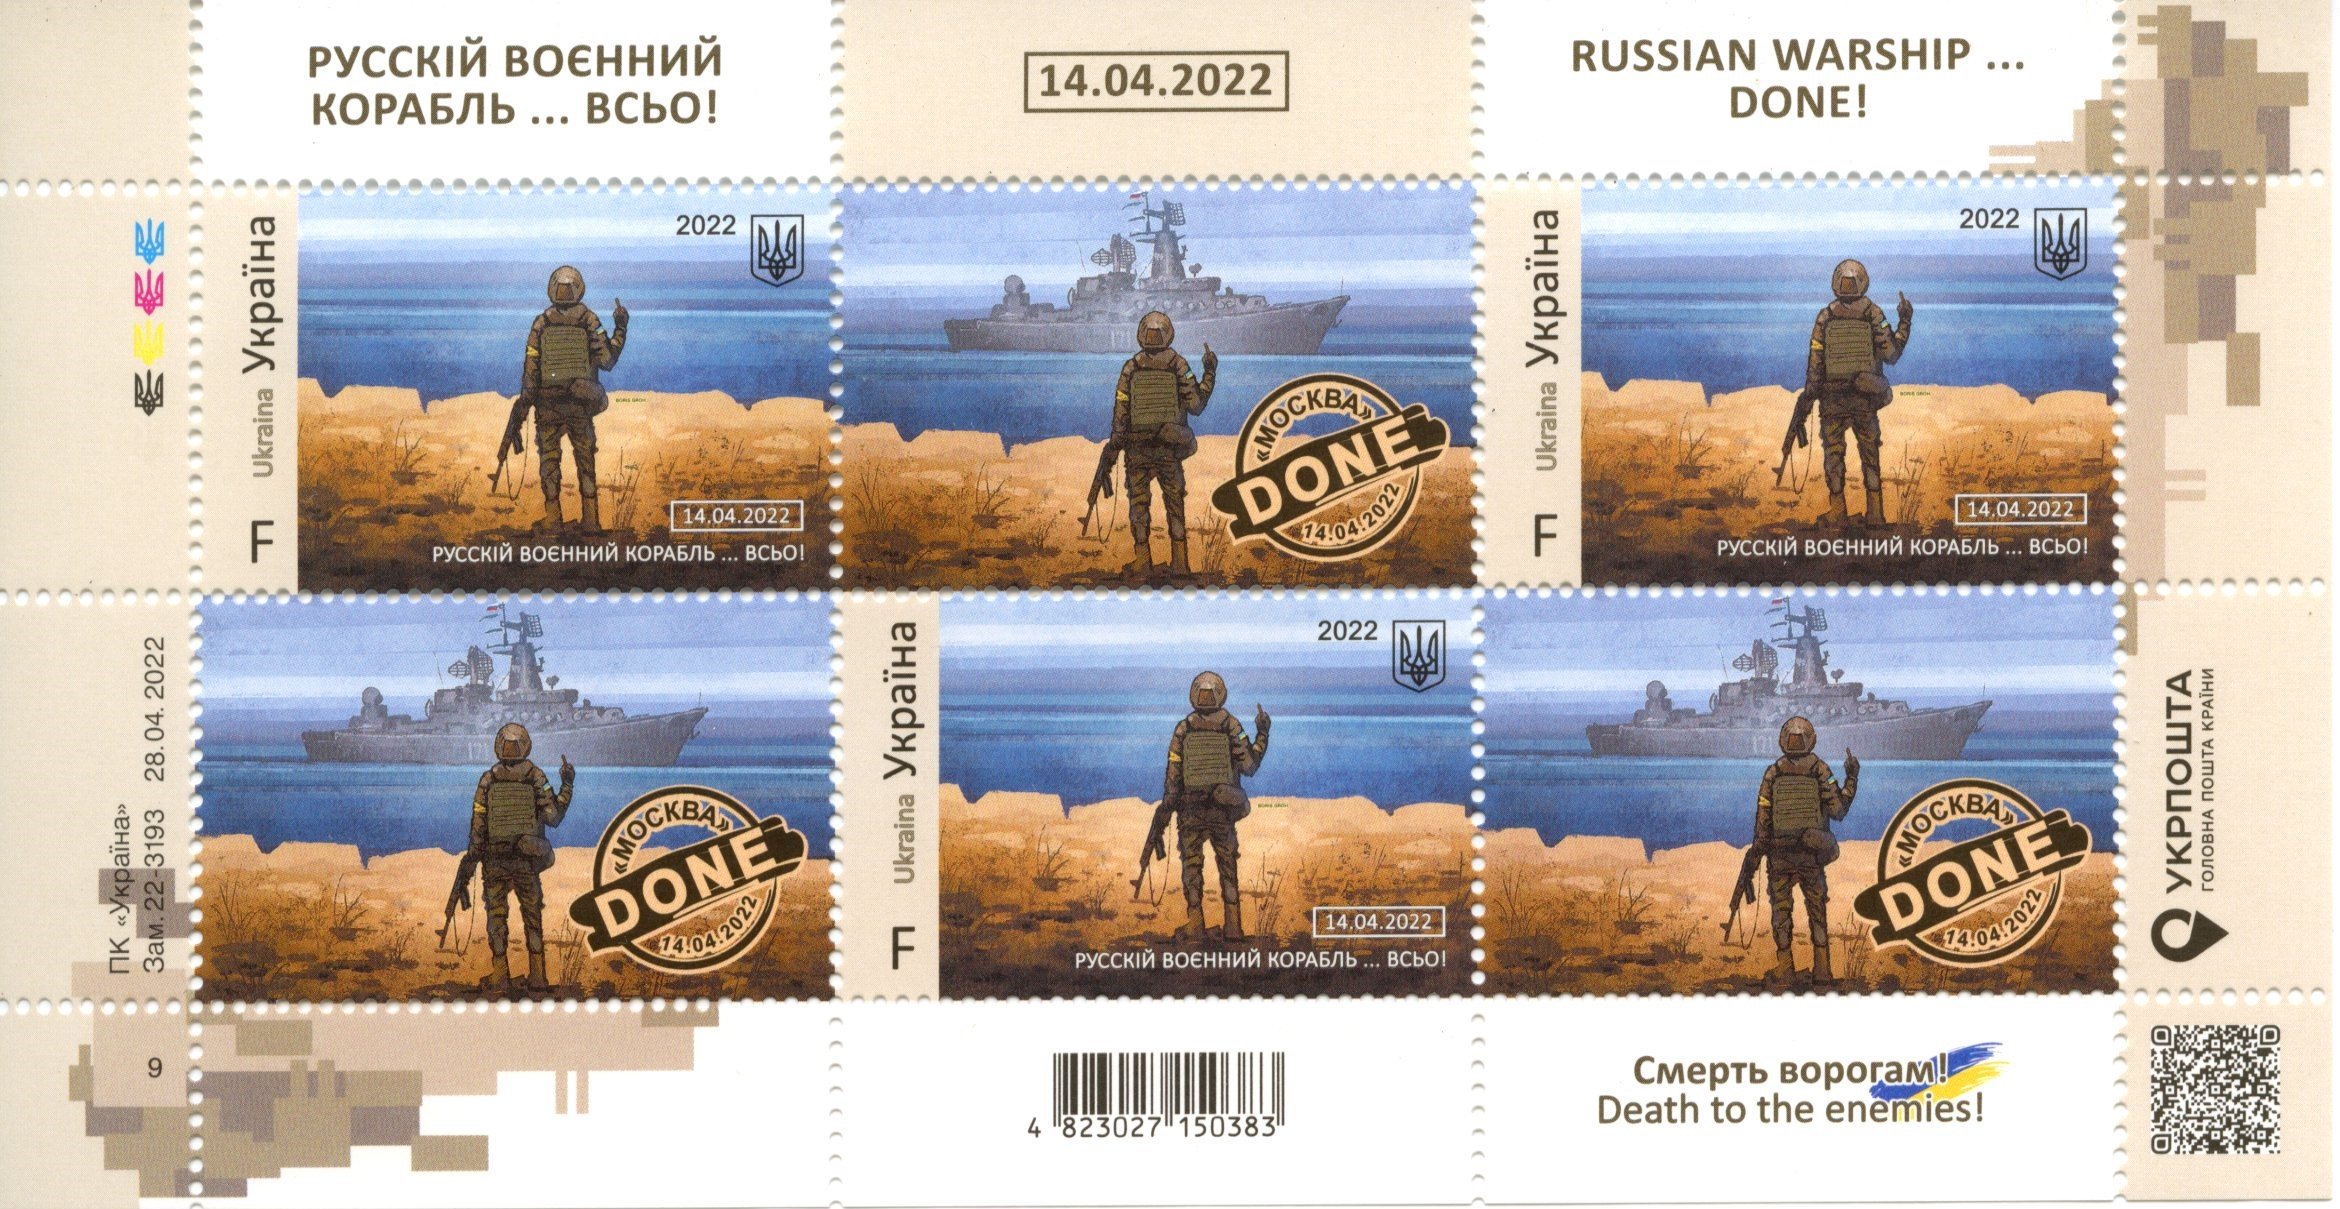 Briefmarke "Russian warship... done!", Ukraine, April 2022 (Museum Berlin-Karlshorst CC BY-NC-SA)